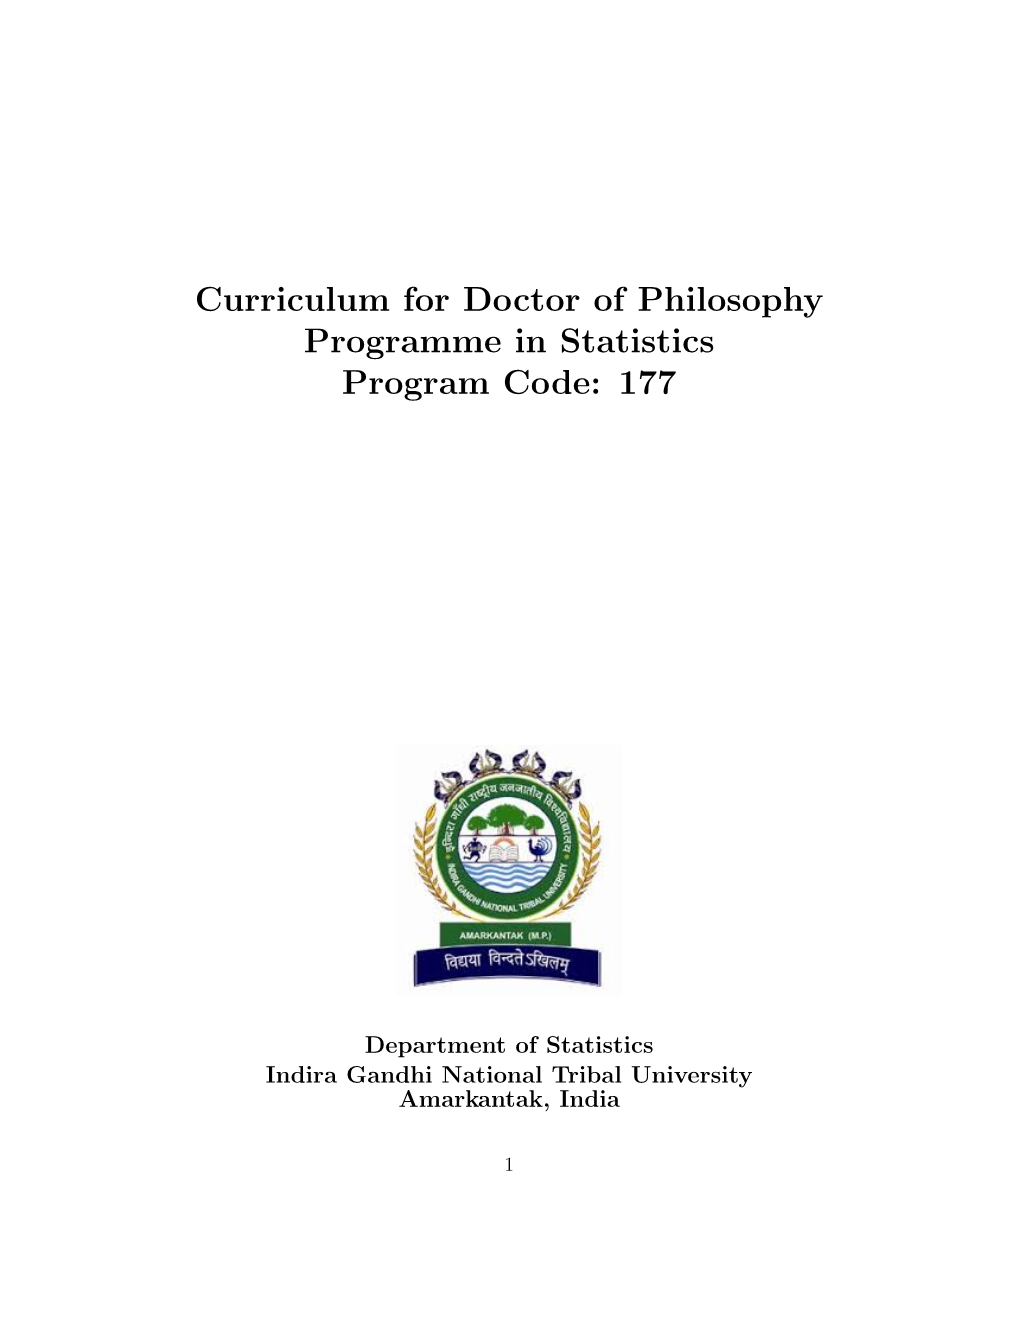 Ph.D. (Statistics)